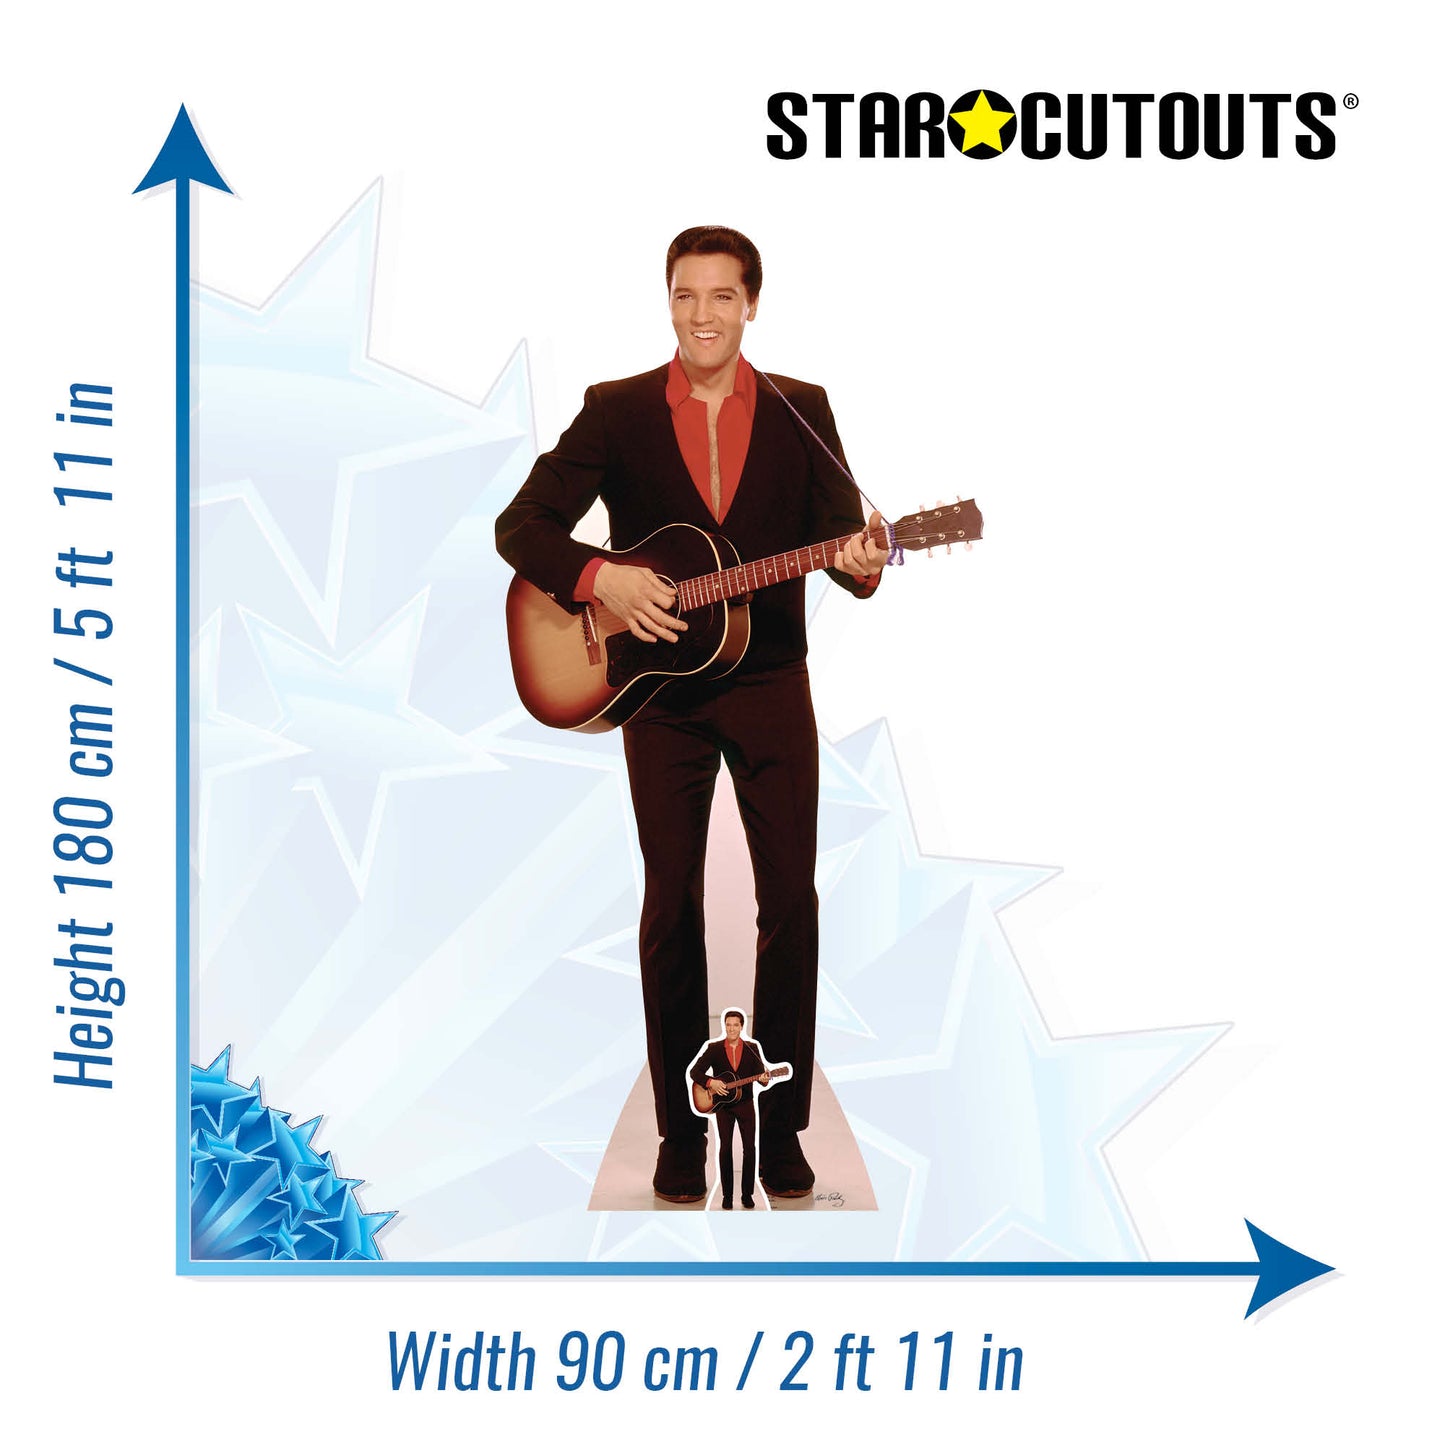 Elvis Red Shirt and Guitar Cardboard Cutout MyCardboardCutout